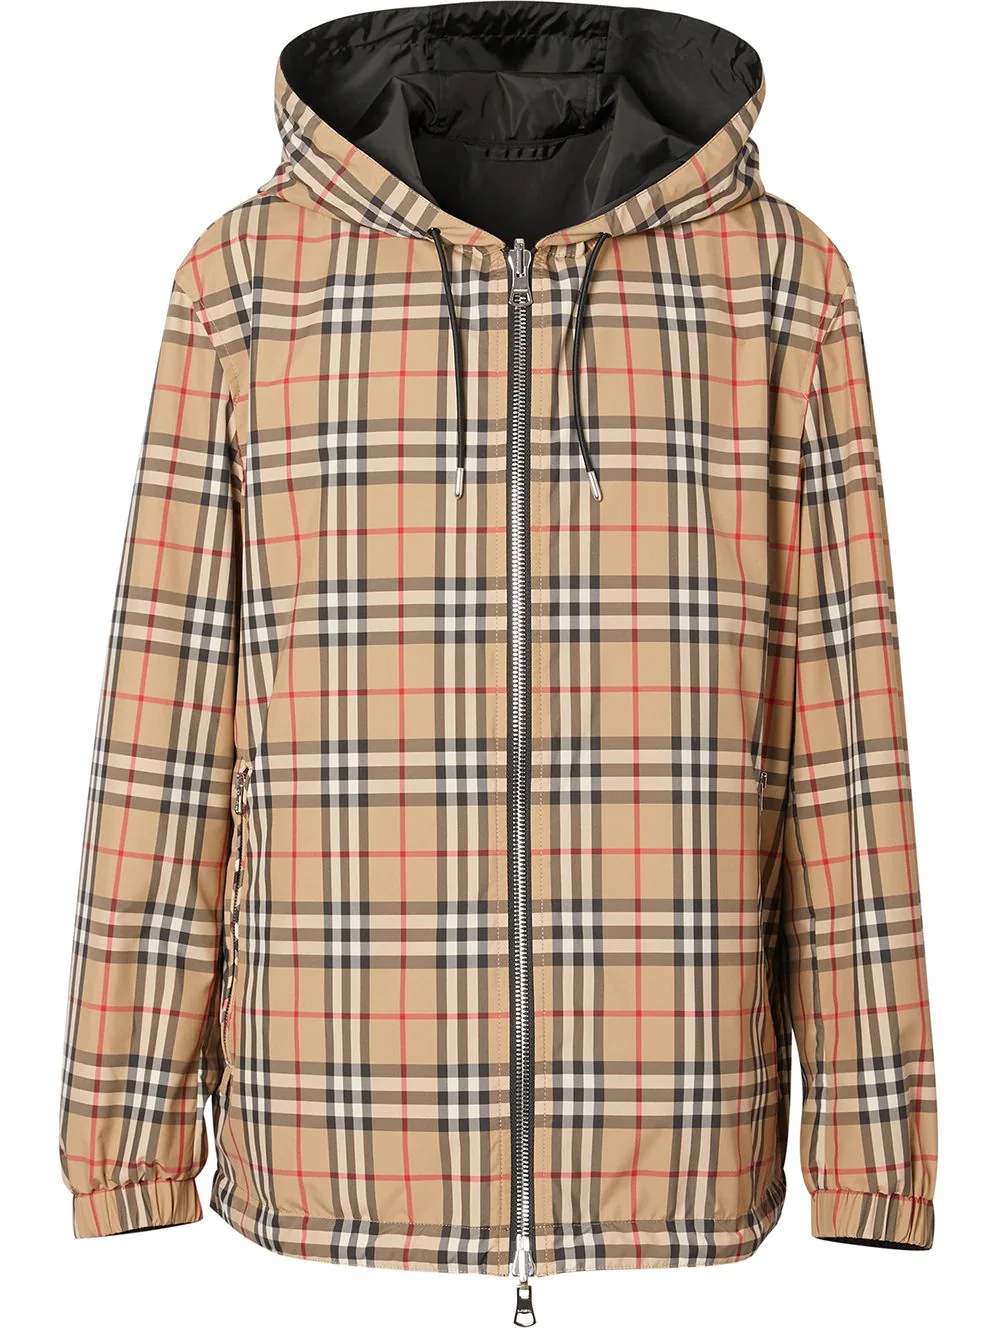 Burberry reversible Vintage Check jacket